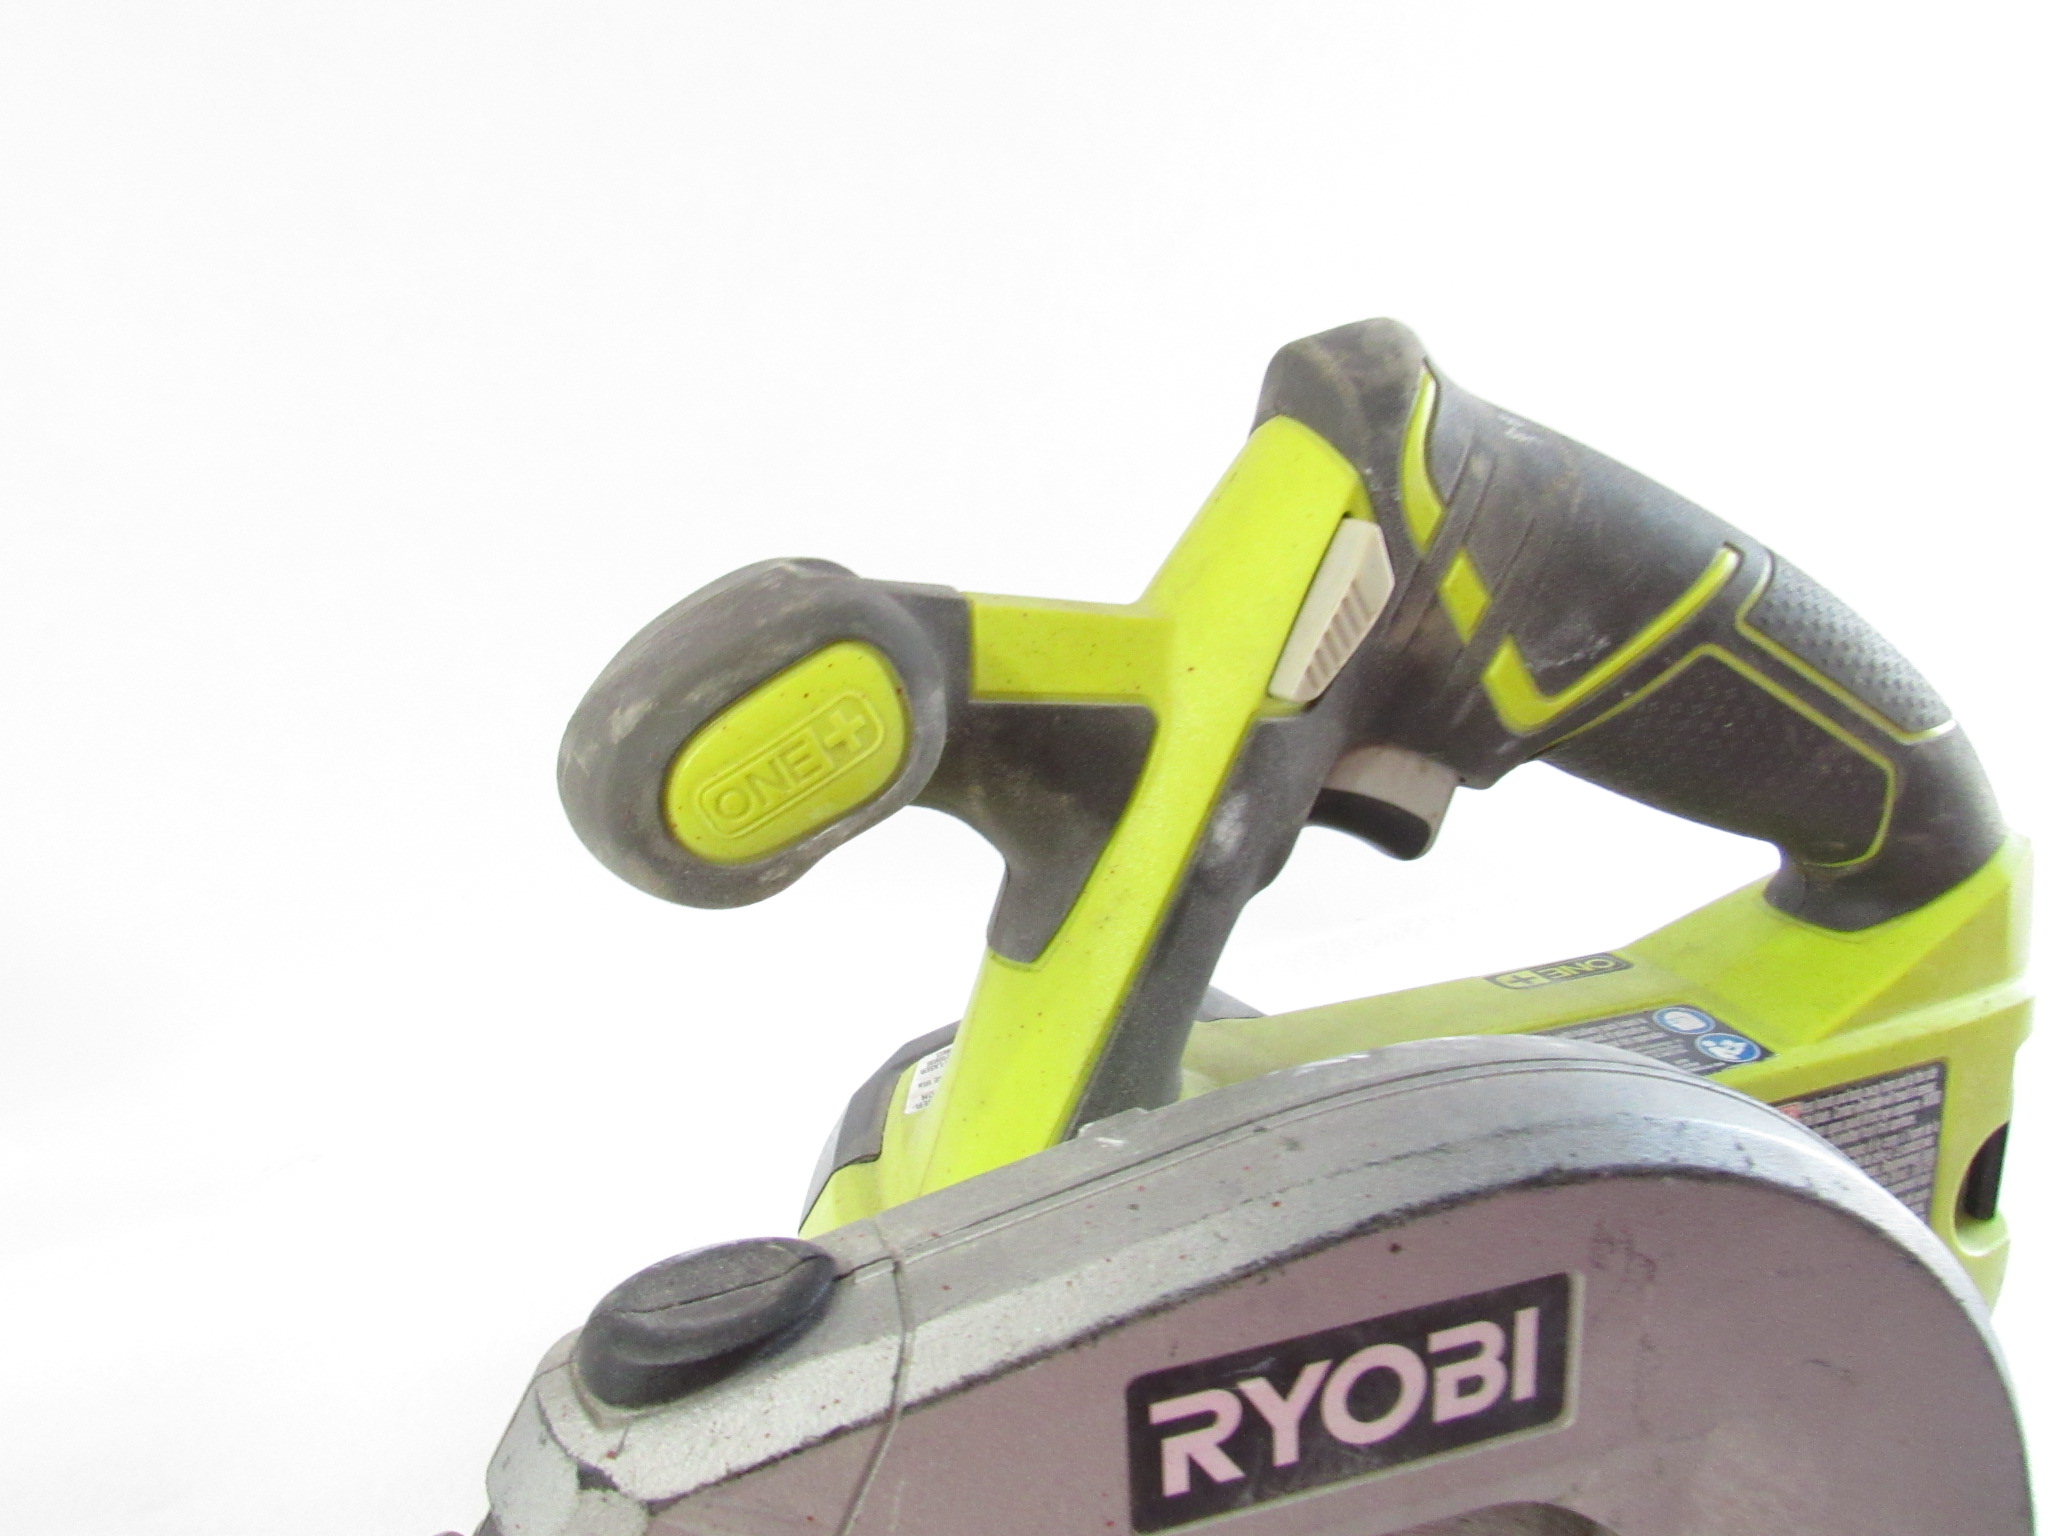 Ryobi P506 18V ONE+ 5-1/2 Cordless Circular Saw Tool w/ Battery